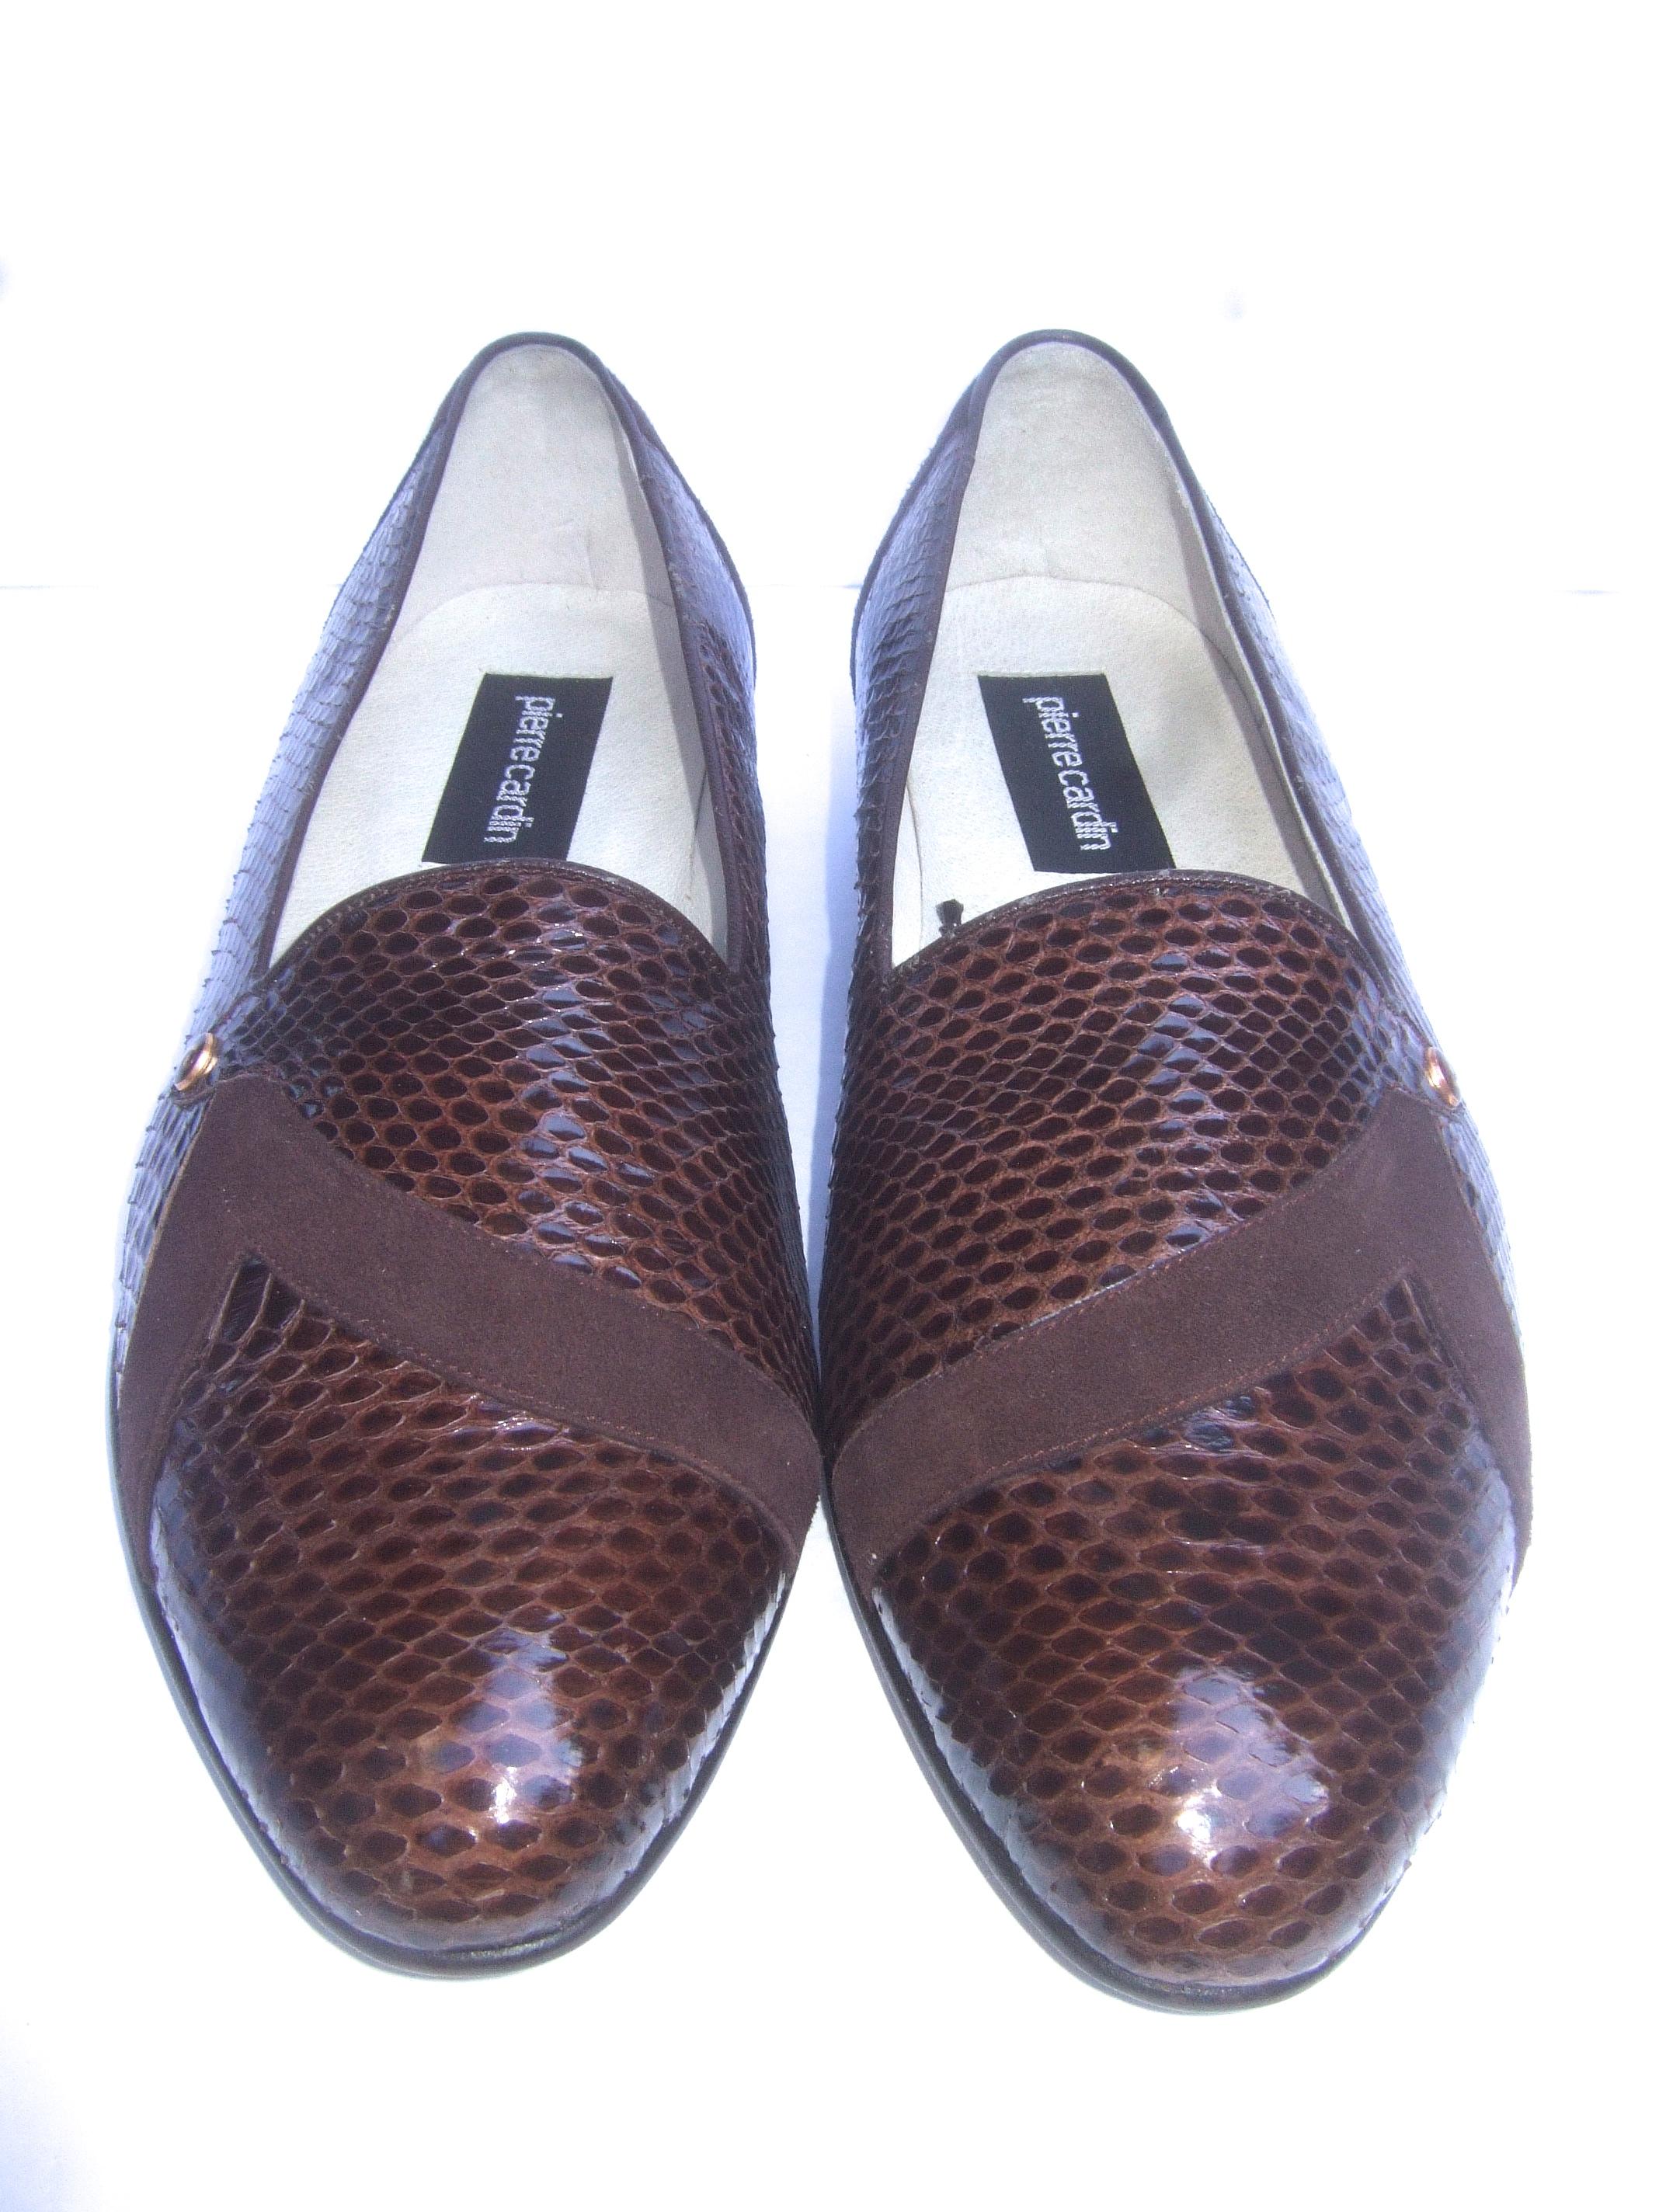 Pierre Cardin Men's Brown Snakeskin Dress Shoes New Vintage US Size 11 c 1970s 4